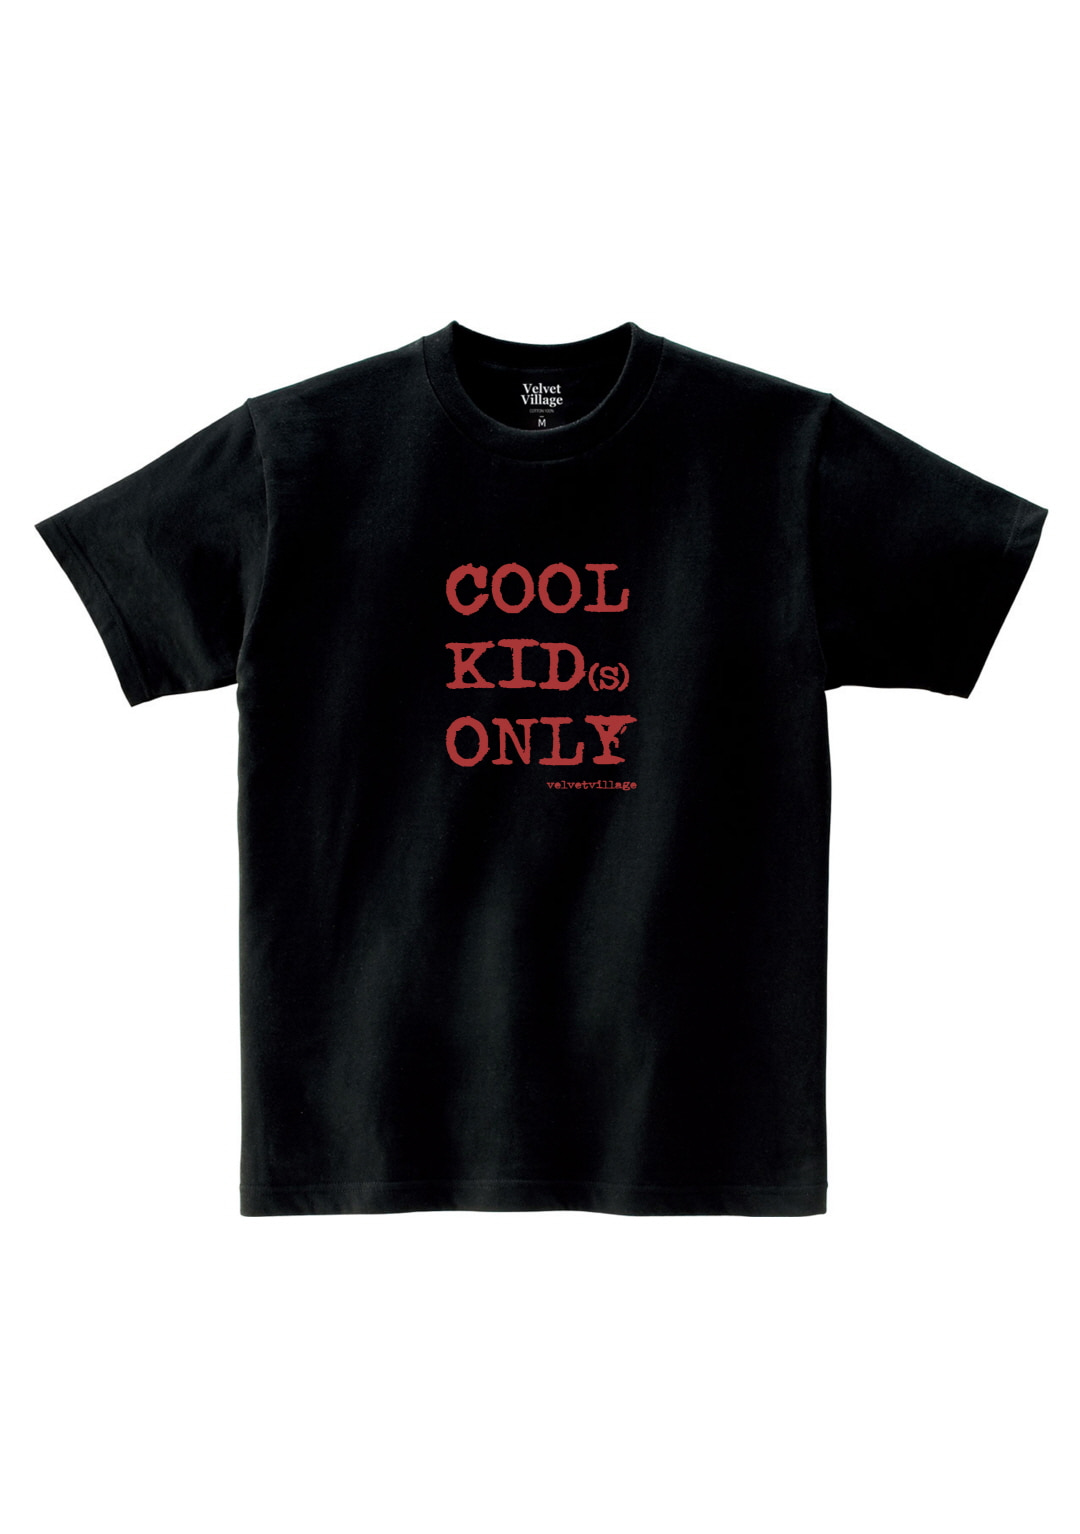 Cool kids only T-shirt (Black)